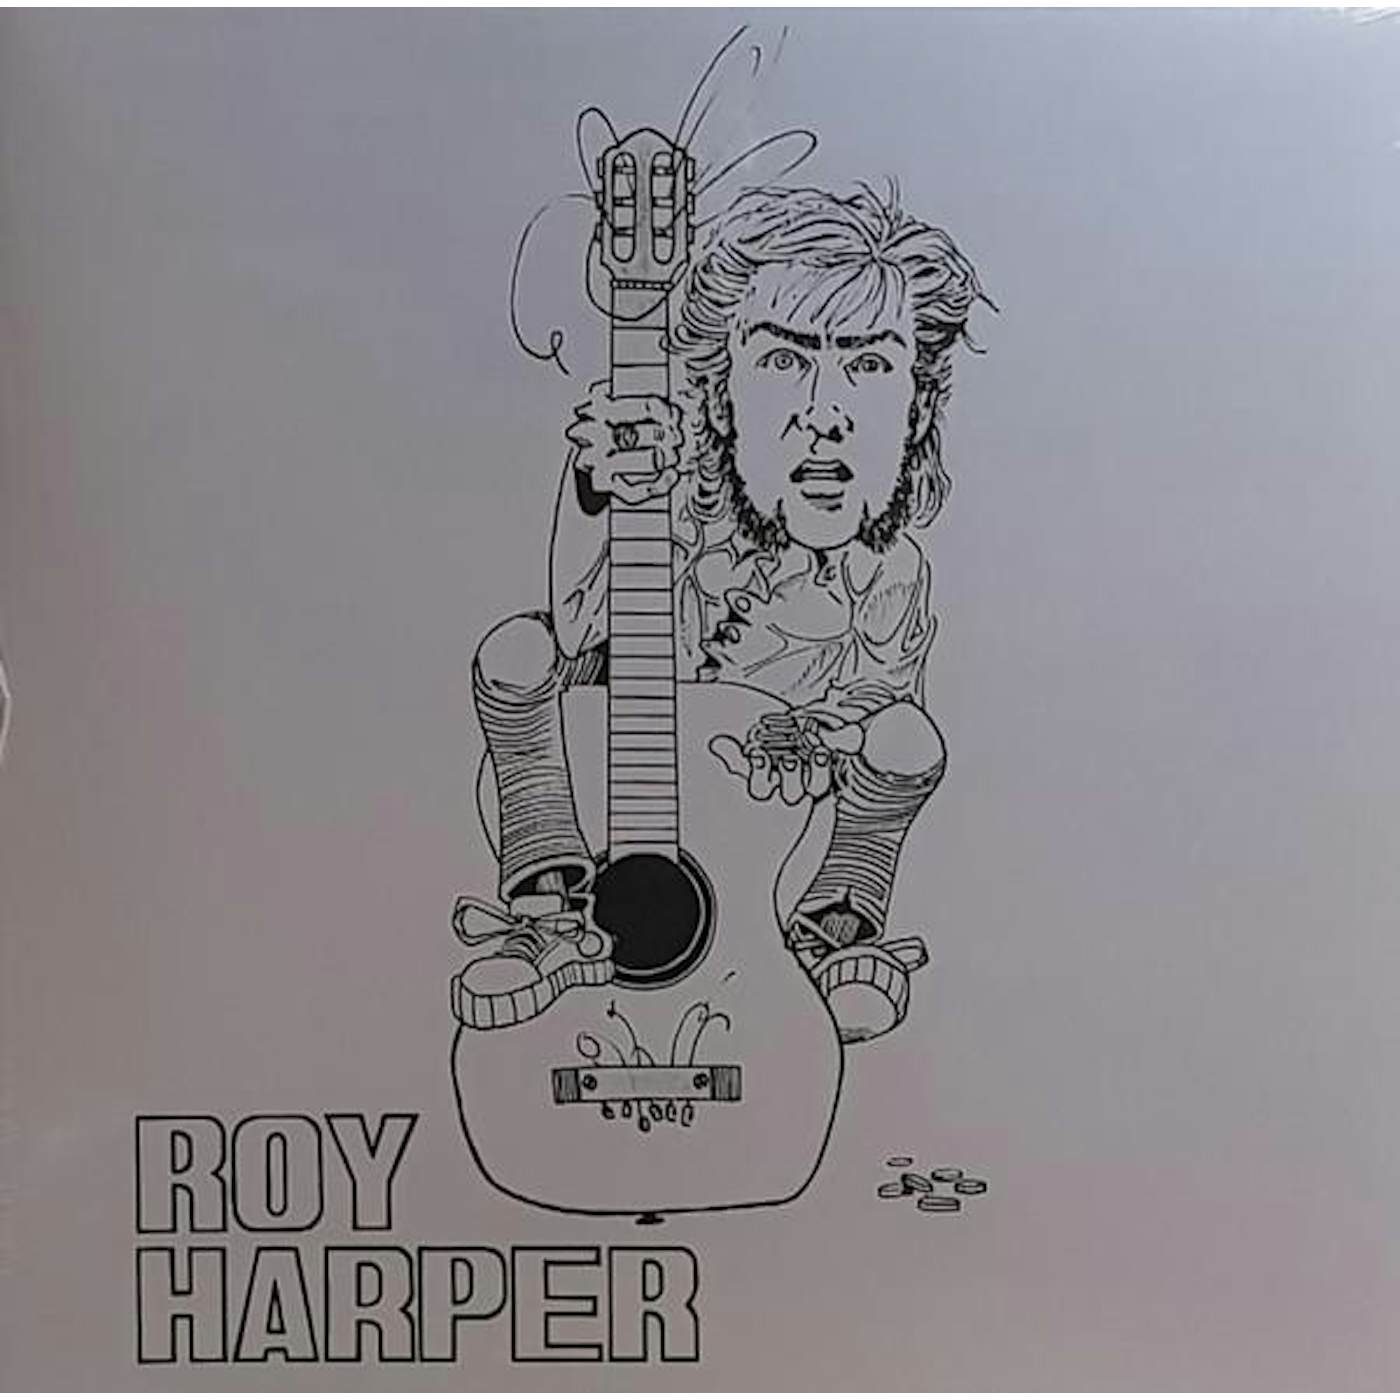 Roy Harper SOPHISTICATED BEGGAR Vinyl Record